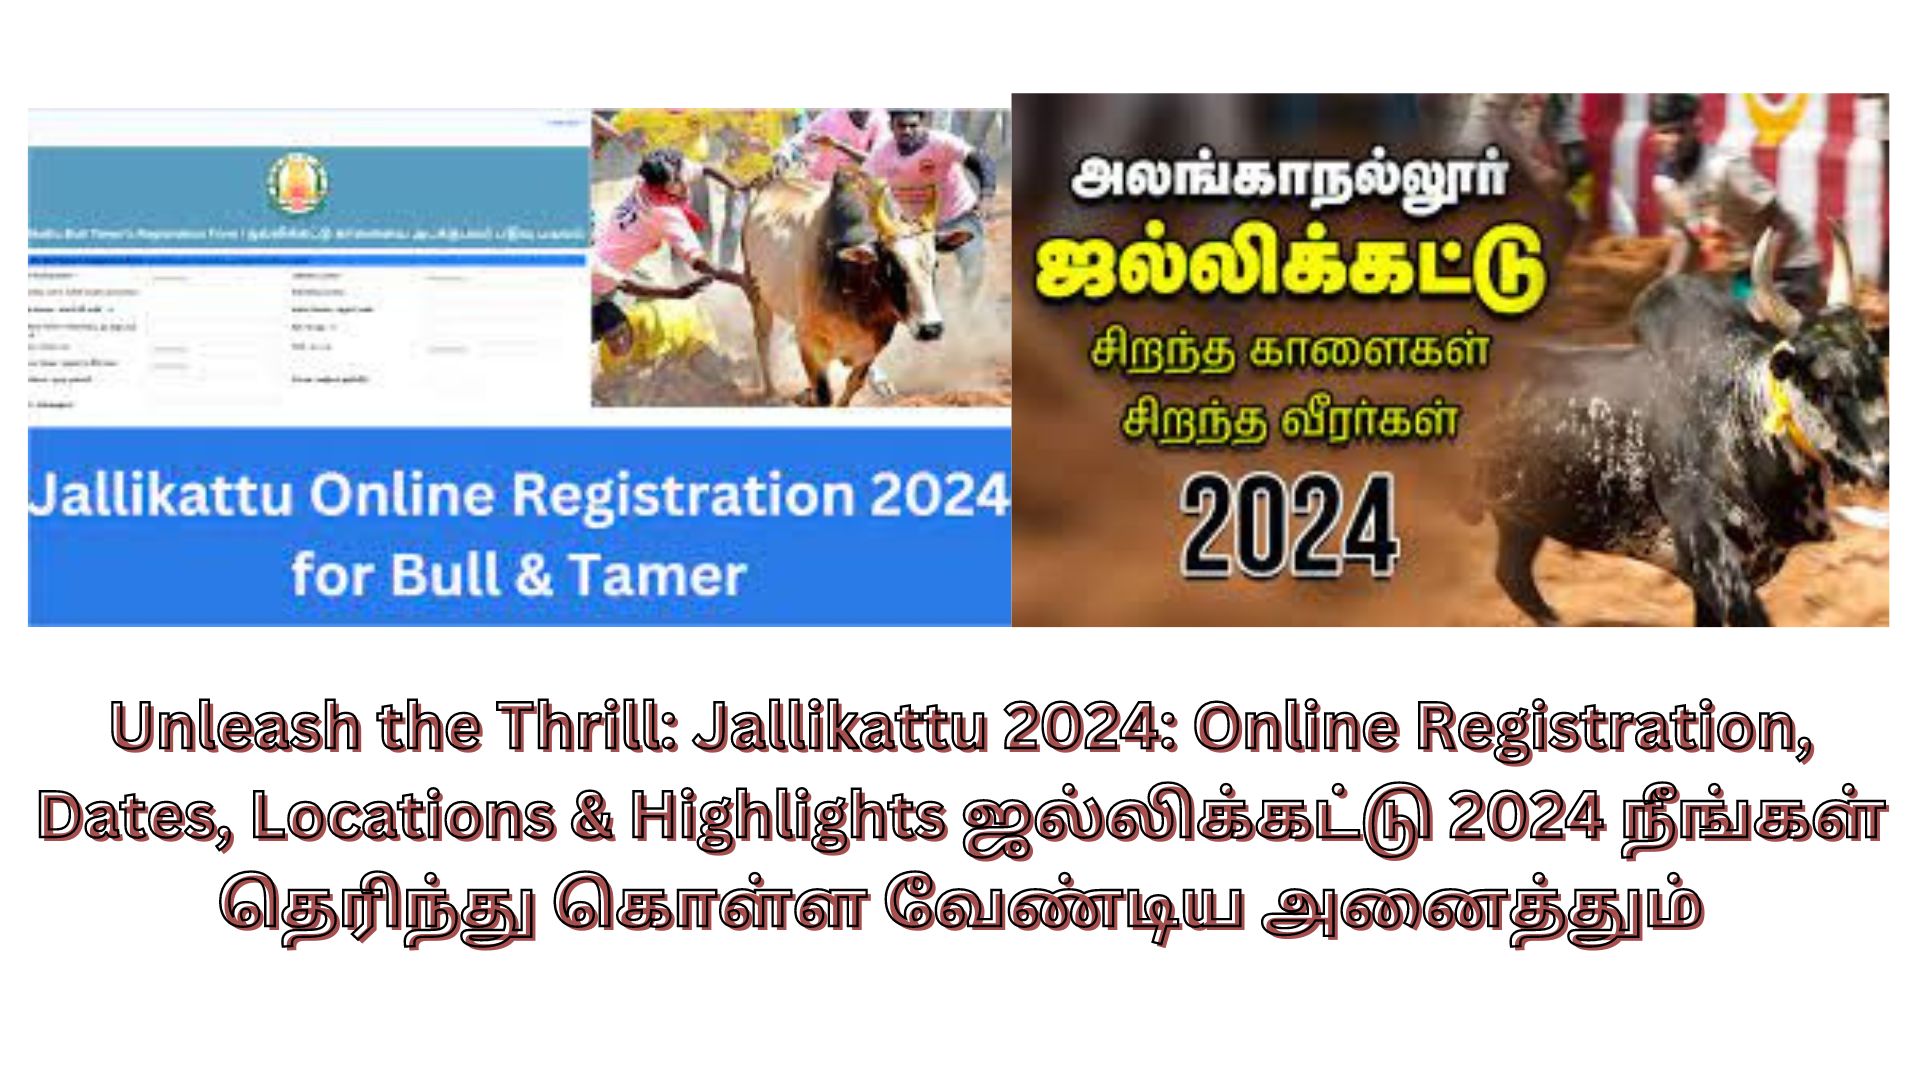 Unleash the Thrill: Jallikattu 2024: Online Registration, Dates, Locations & Highlights ஜல்லிக்கட்டு 2024 நீங்கள் தெரிந்து கொள்ள வேண்டிய அனைத்தும்